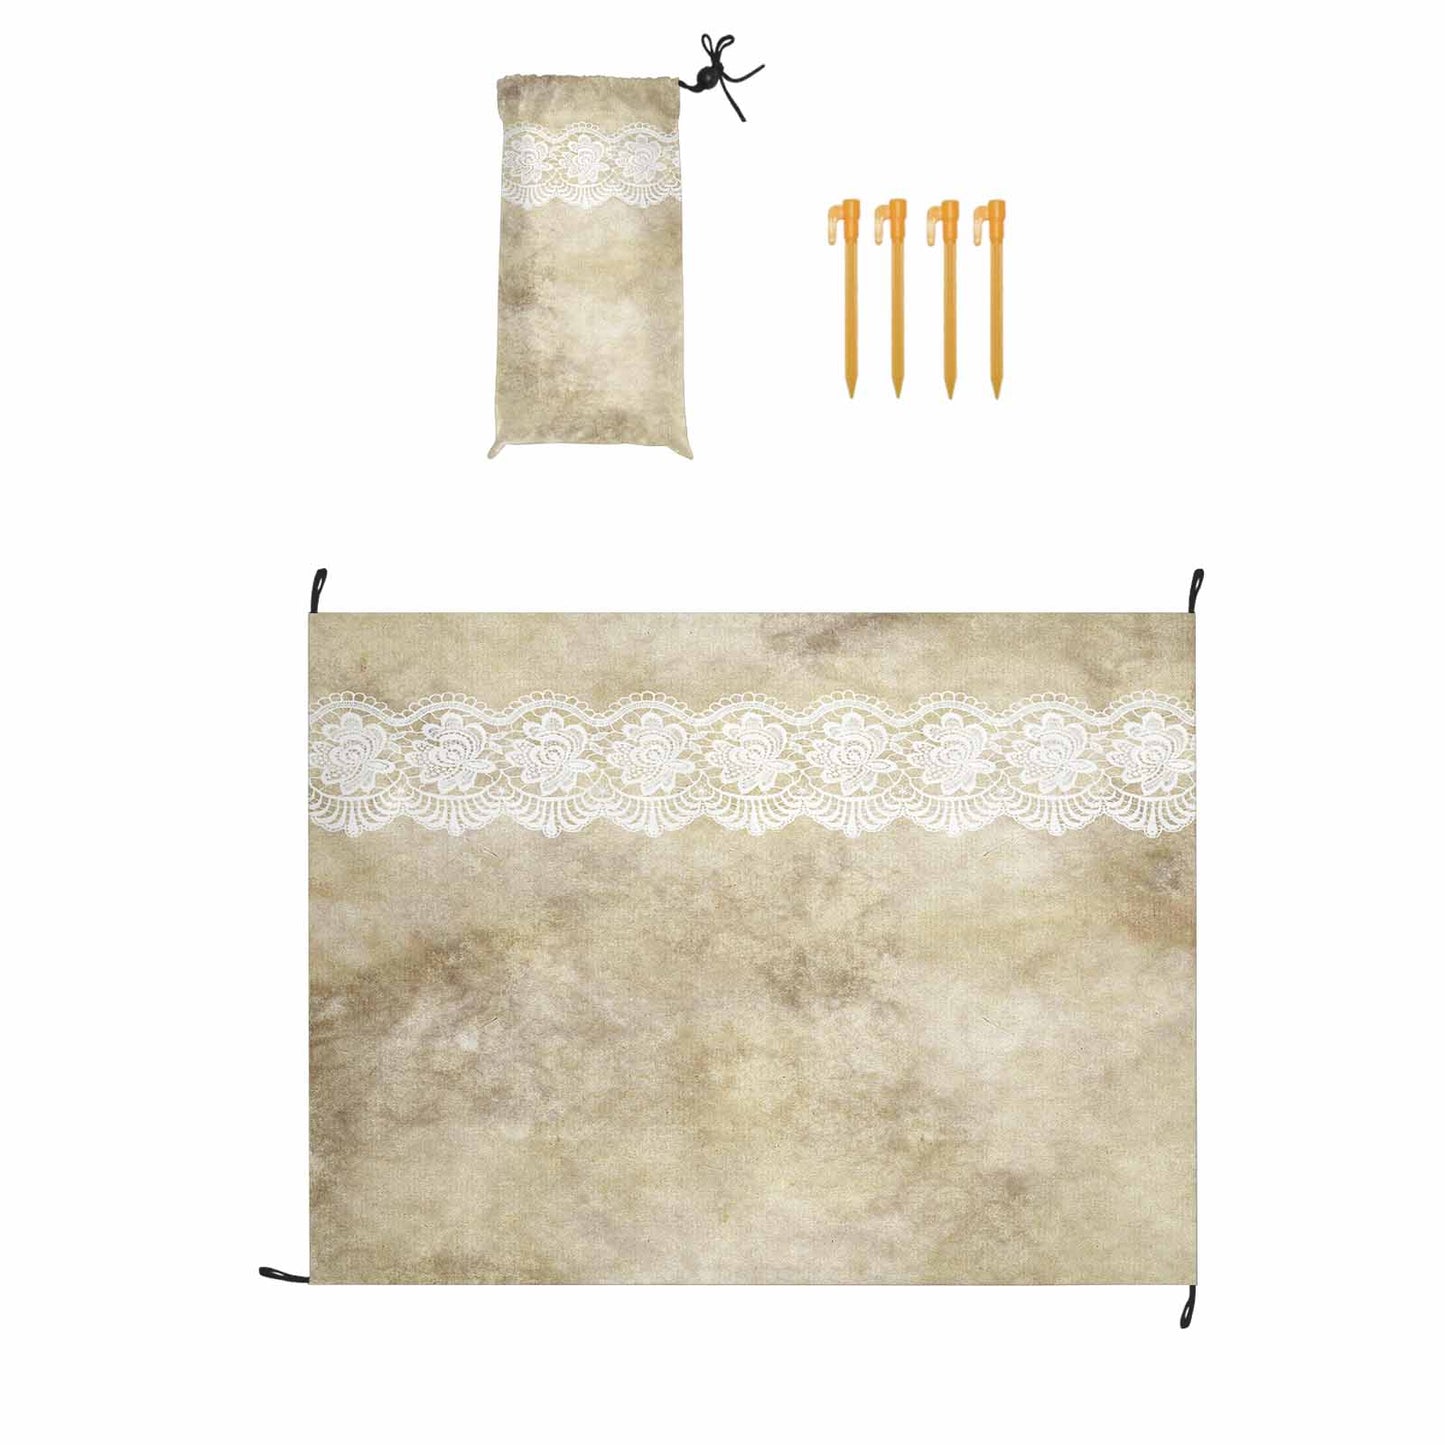 Victorian lace print waterproof picnic mat, 69 x 55in, design 28